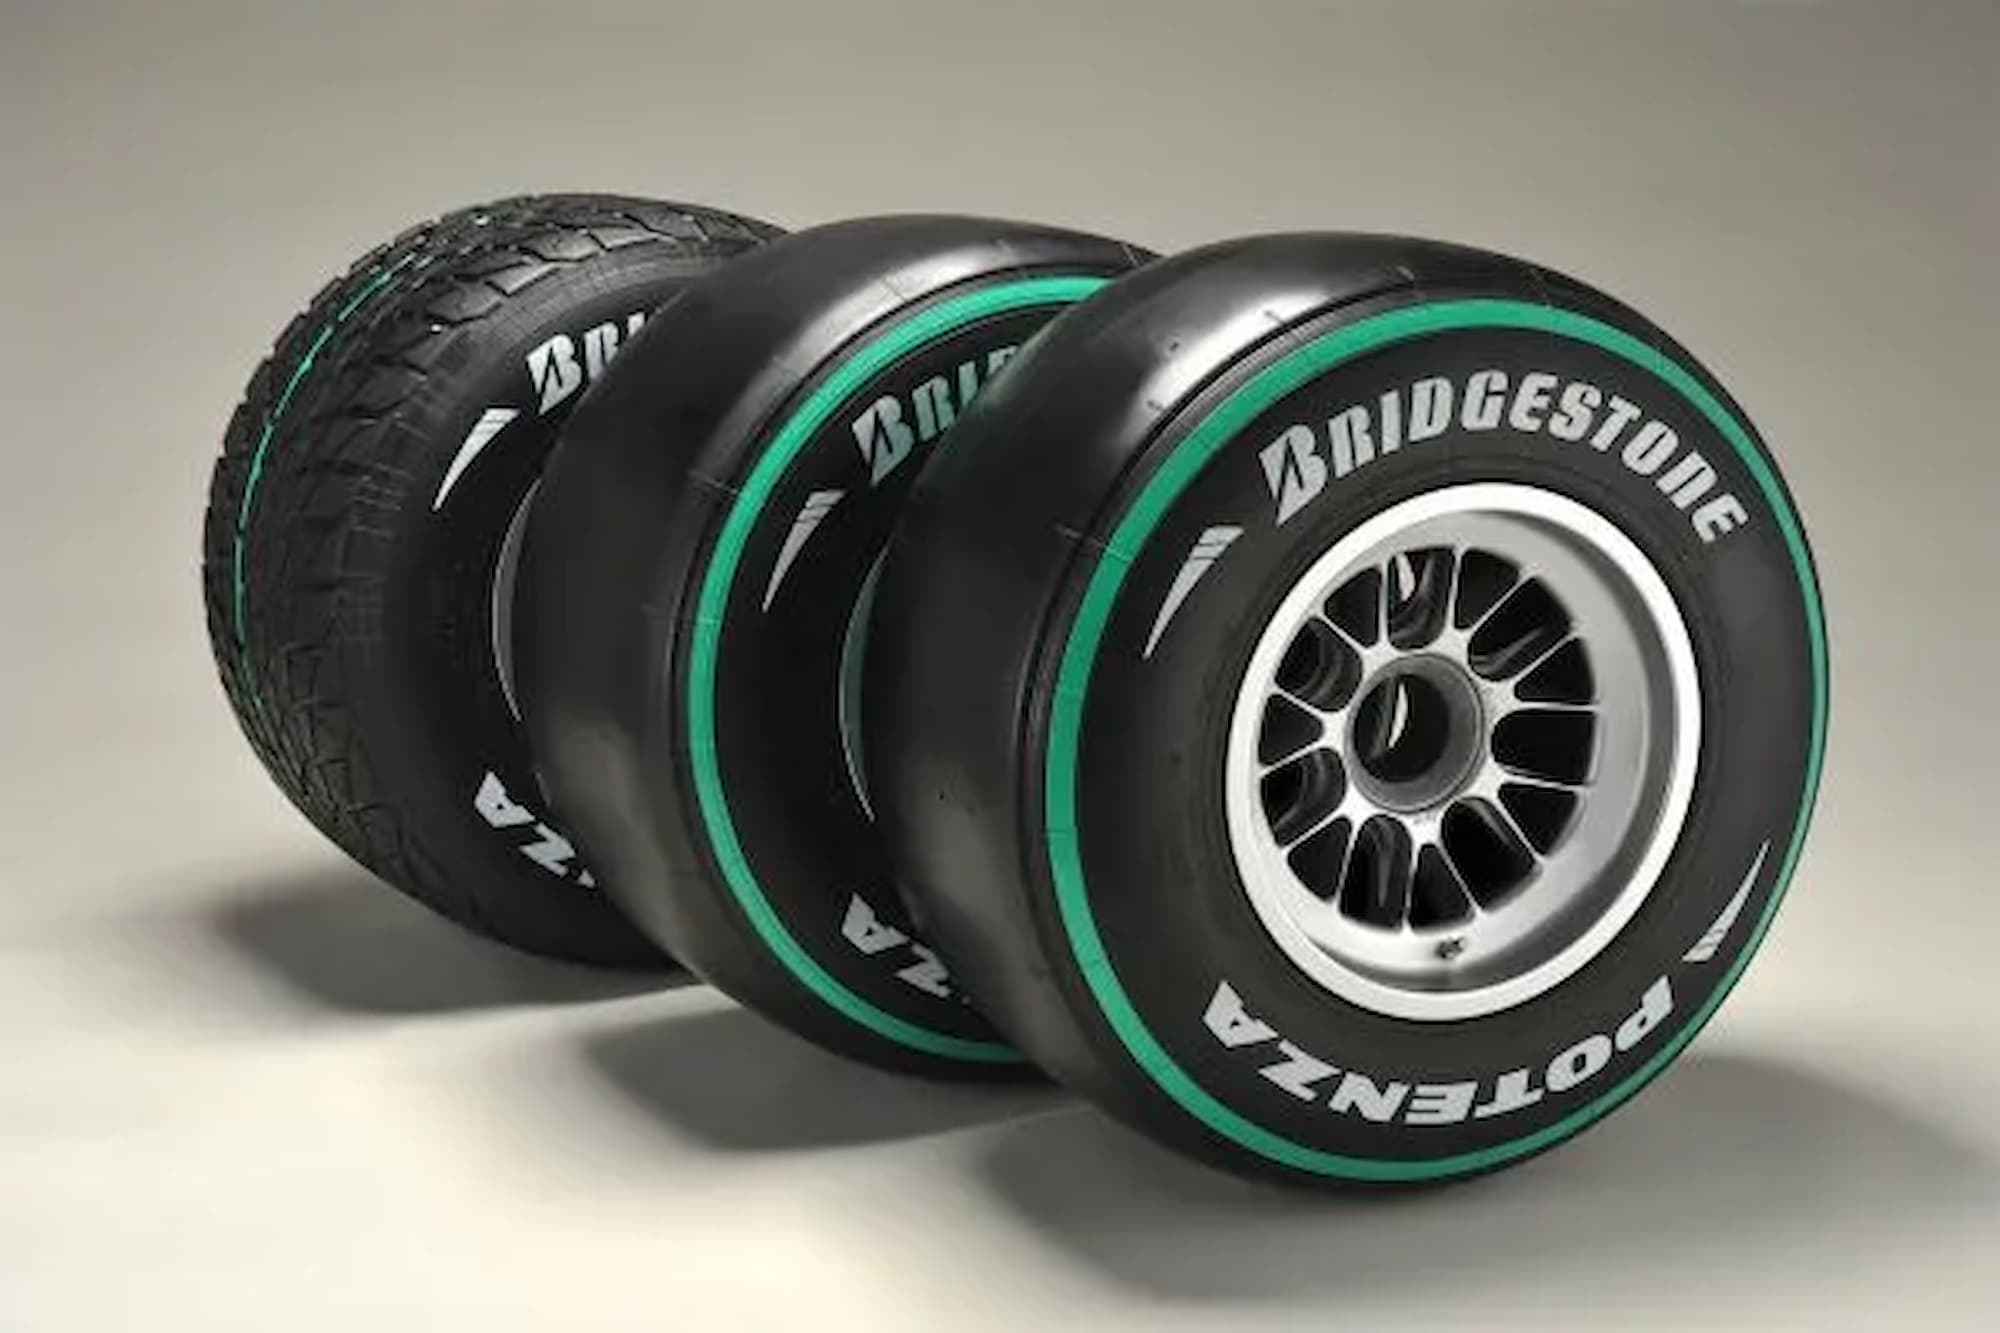 Neumáticos Bridgestone F1 de 1999